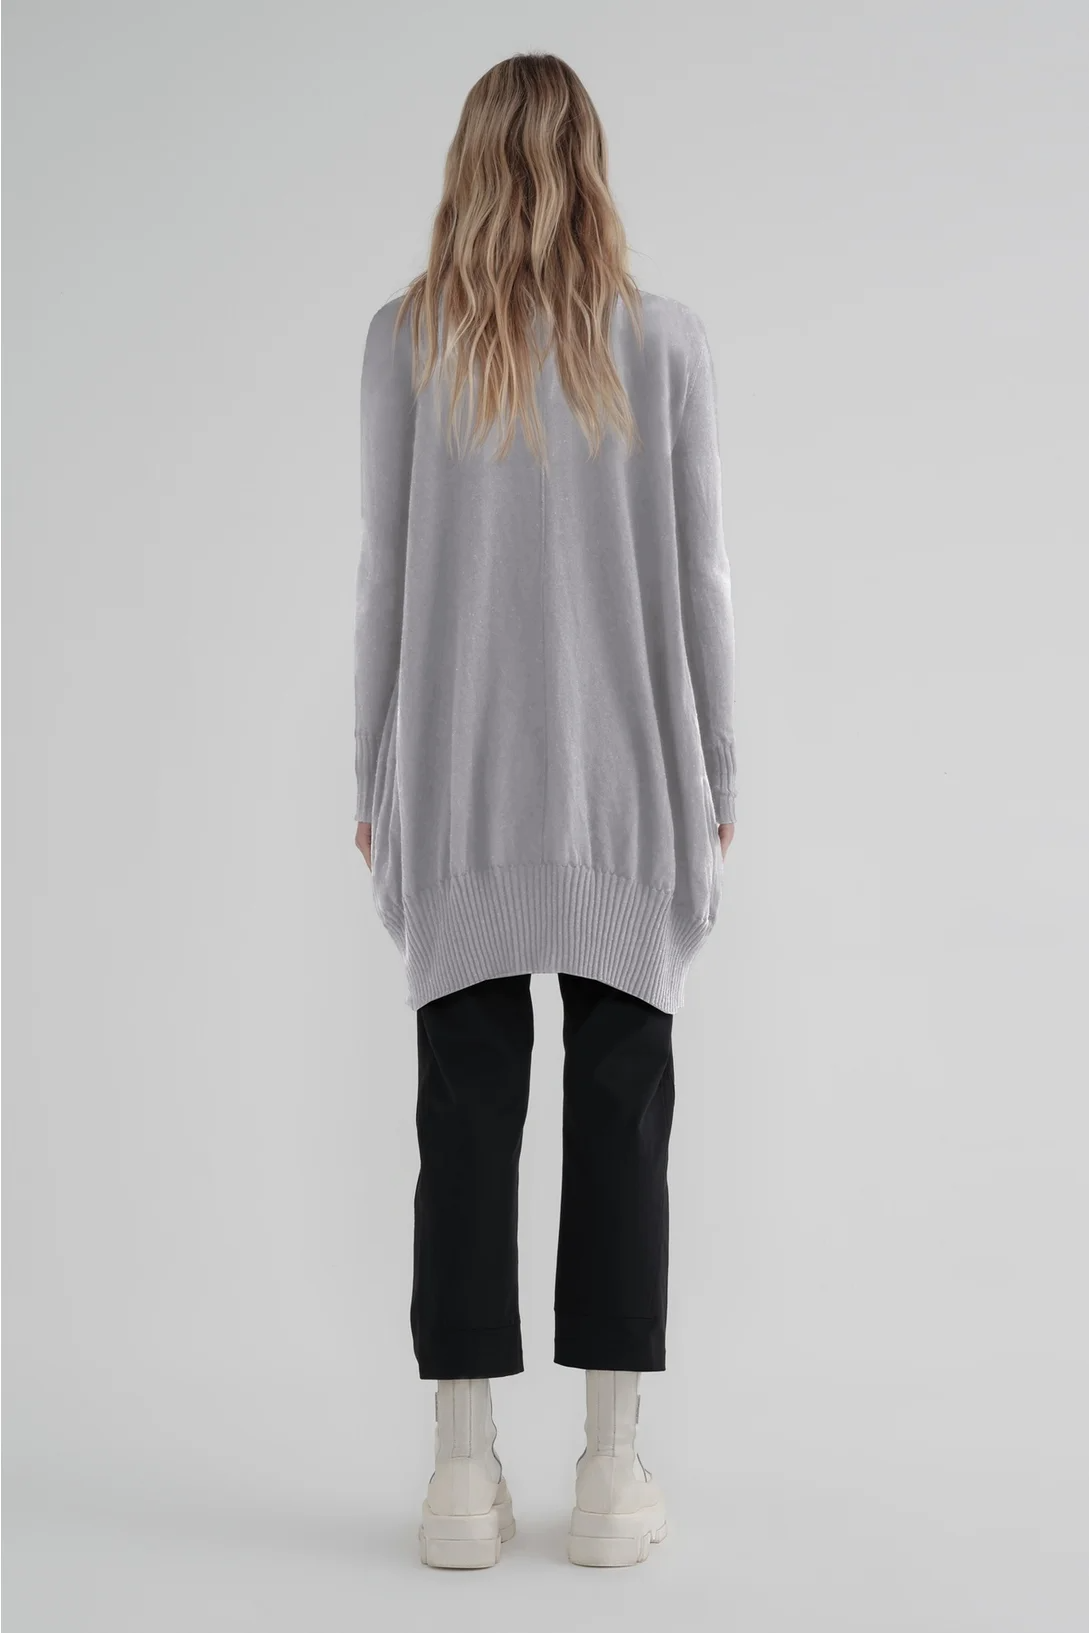 Taylor Inclusive Sweater Dress - Windchime